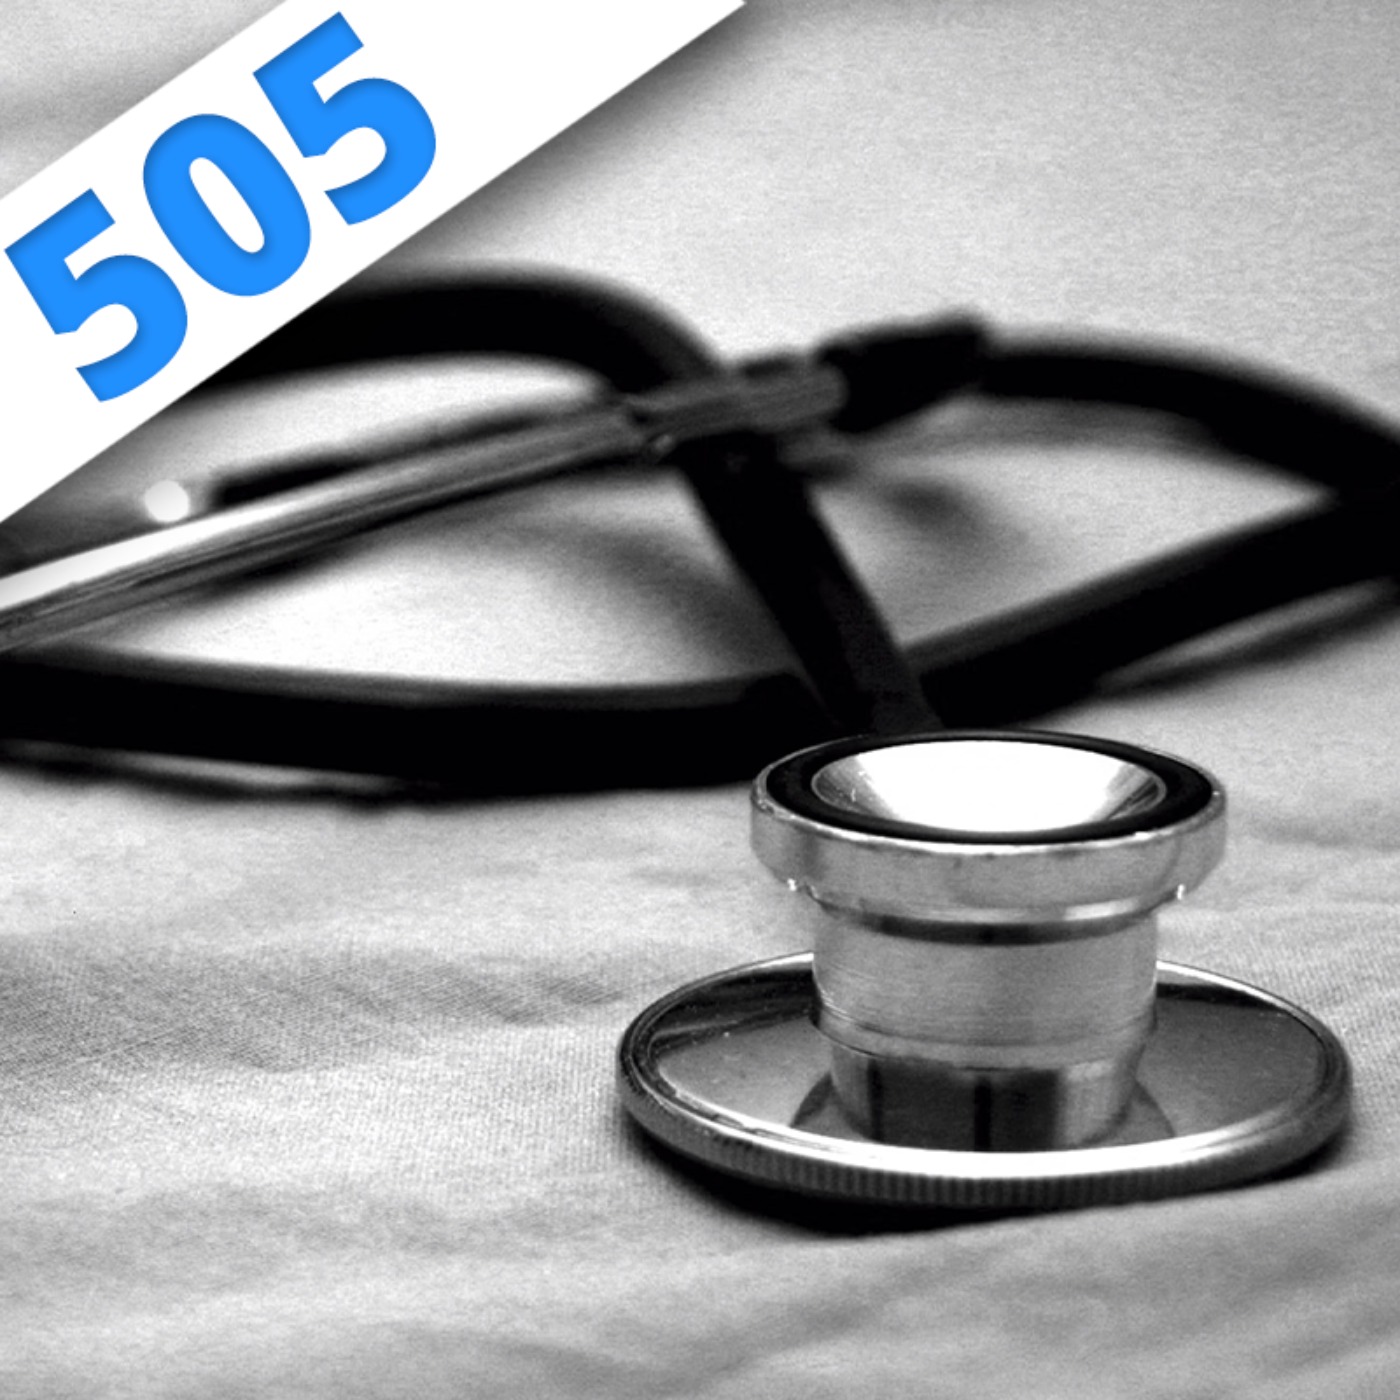 505 - La Recherche clinique